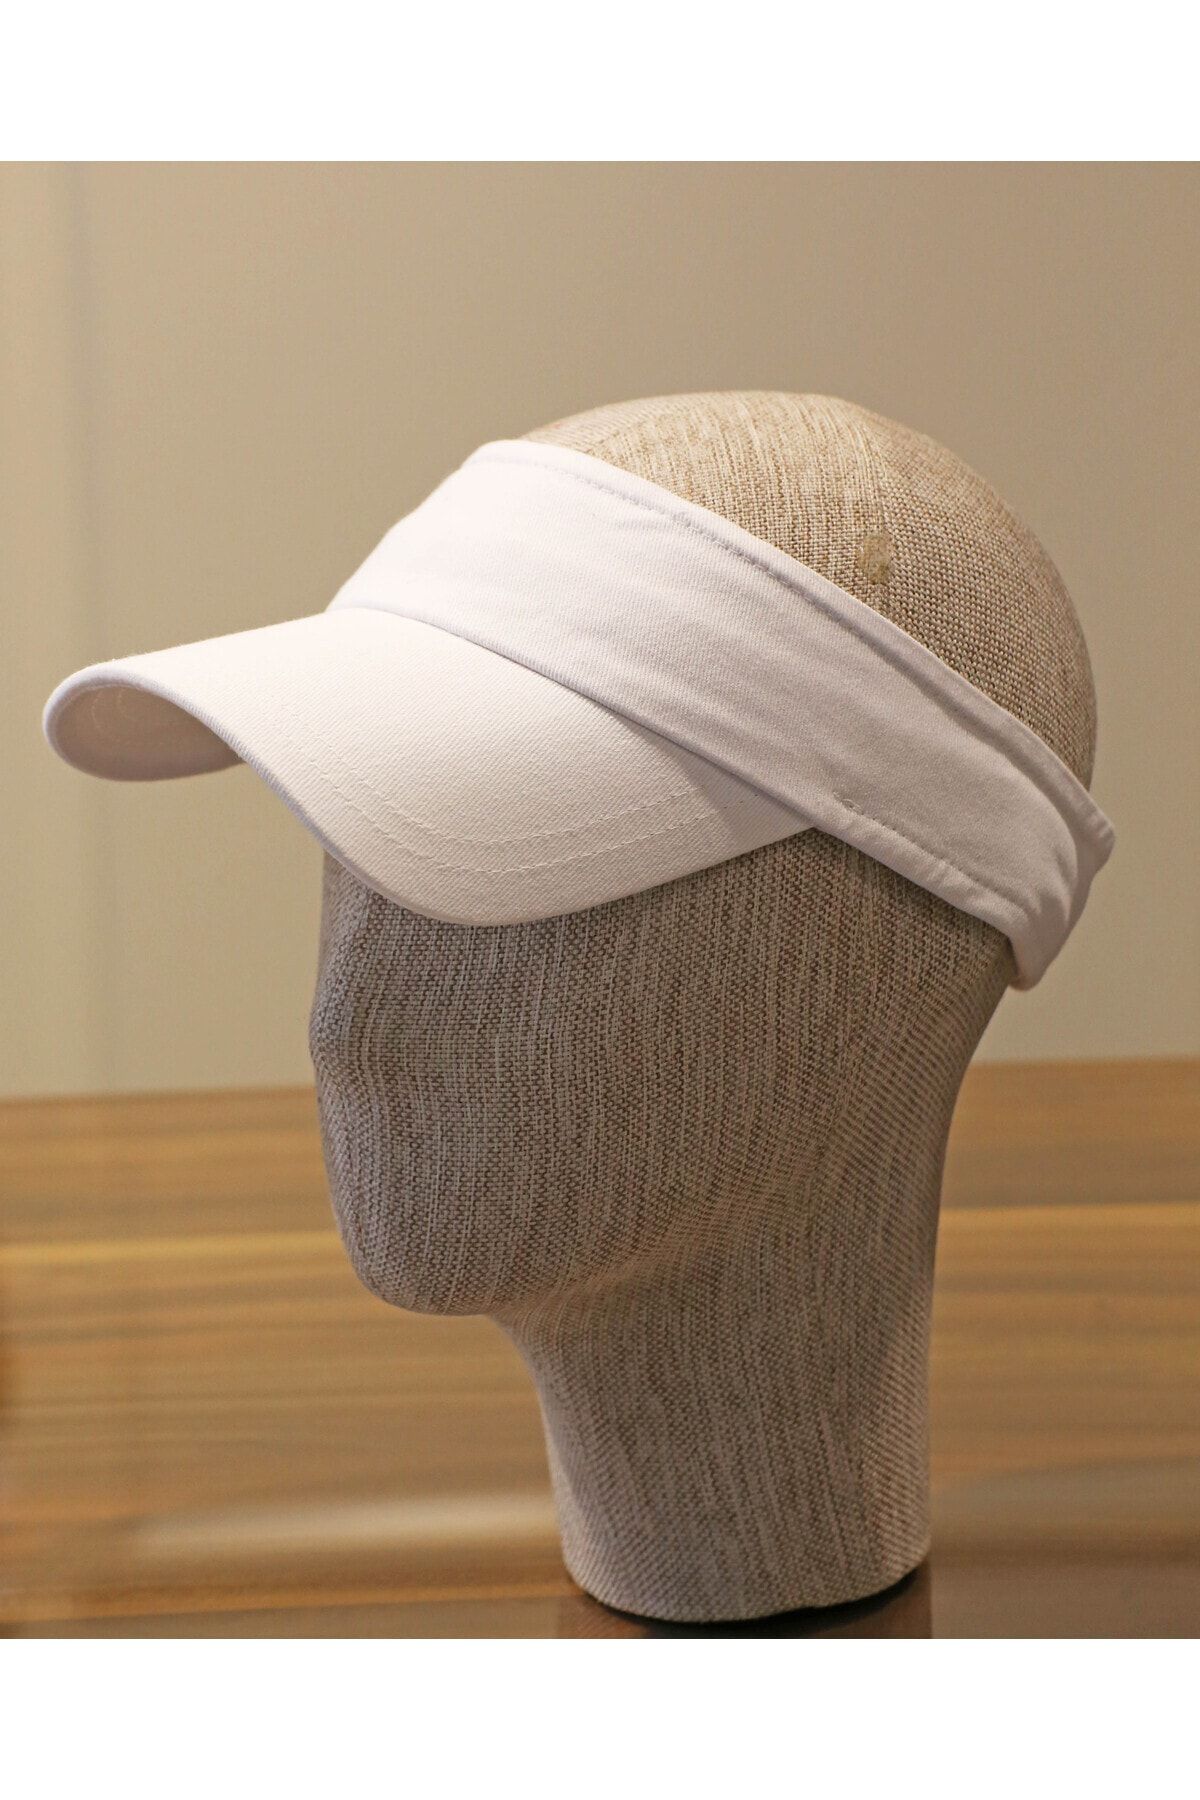 Özgöksu Şapka Unısex Vizör Siperlikli Şapka Tenis Şapkası